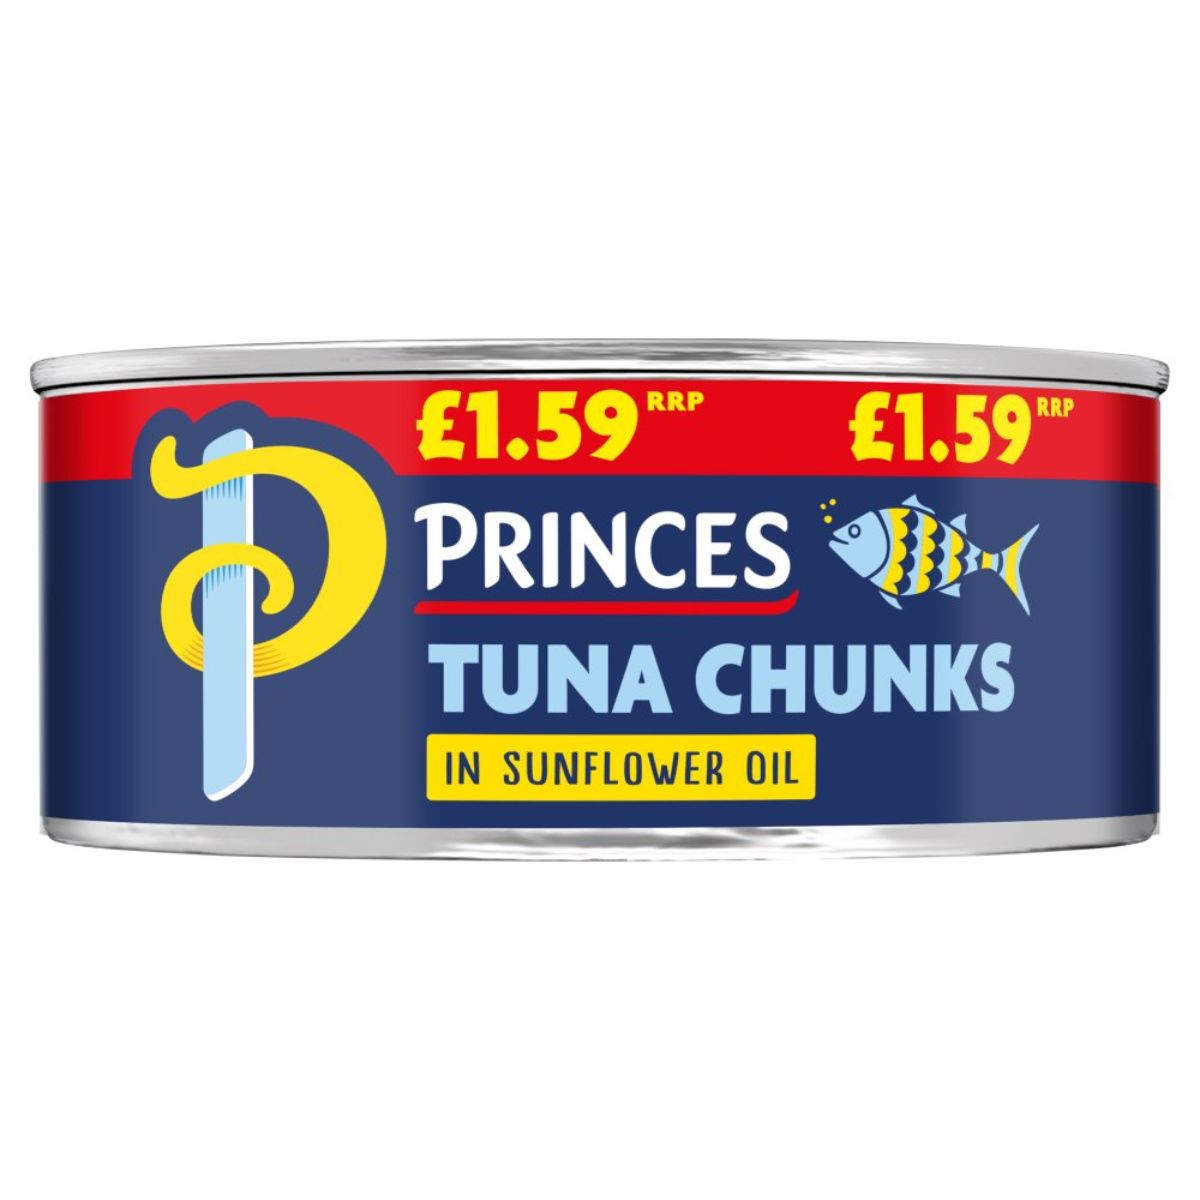 Princes - Tuna Chunks in Sunflower Oil - 145g tuna chunks in sunflower oil.